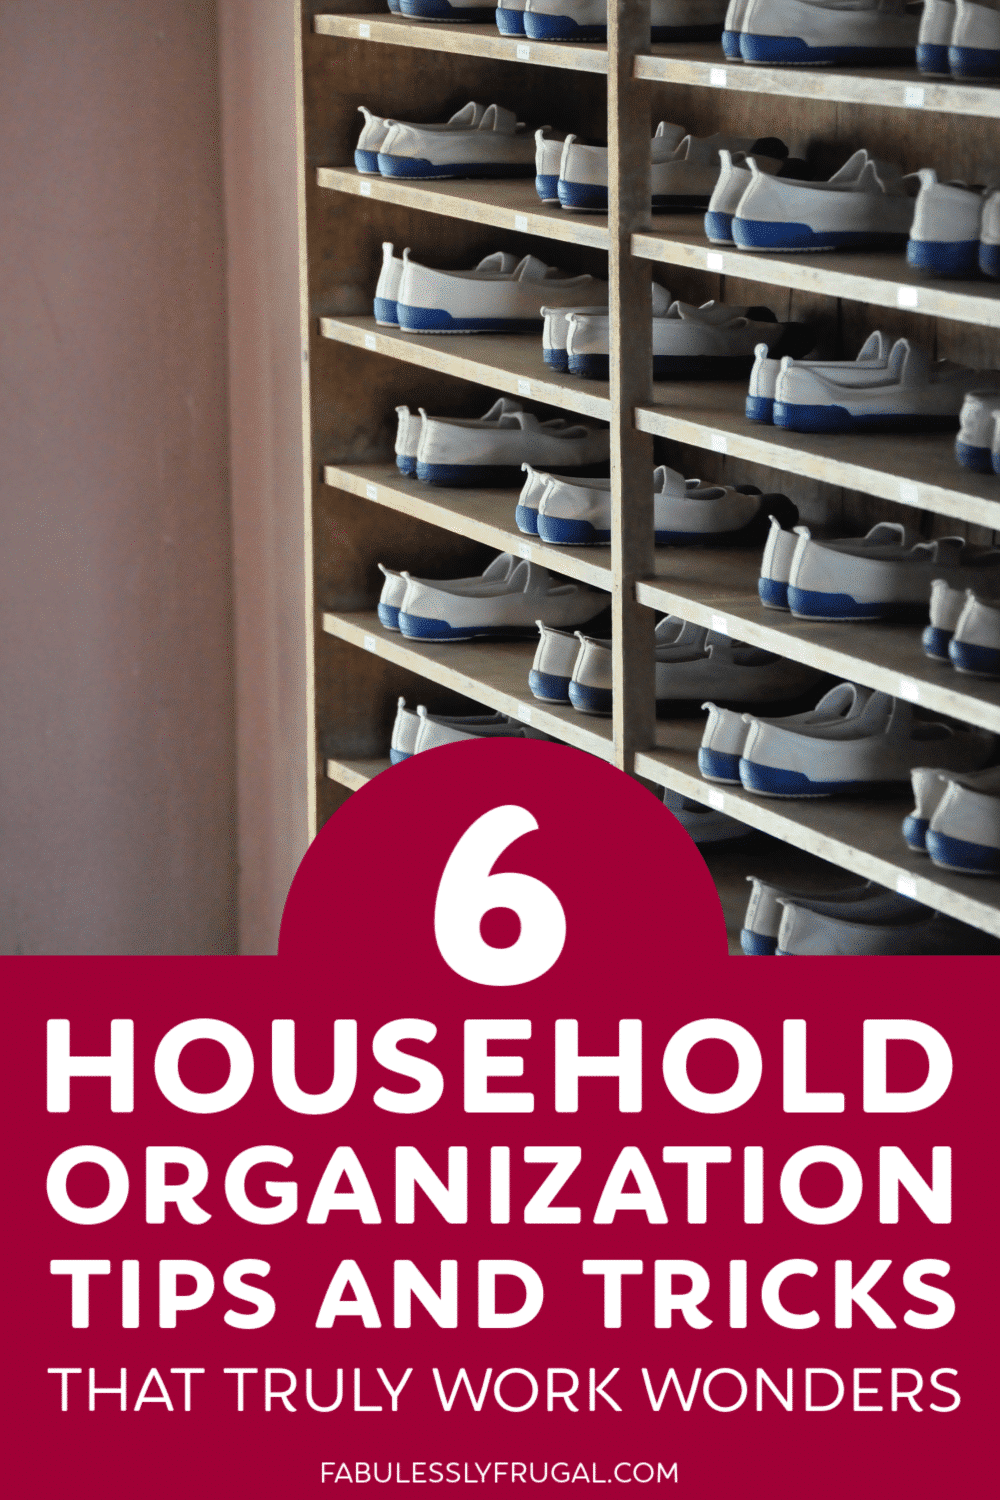 Home organization tips